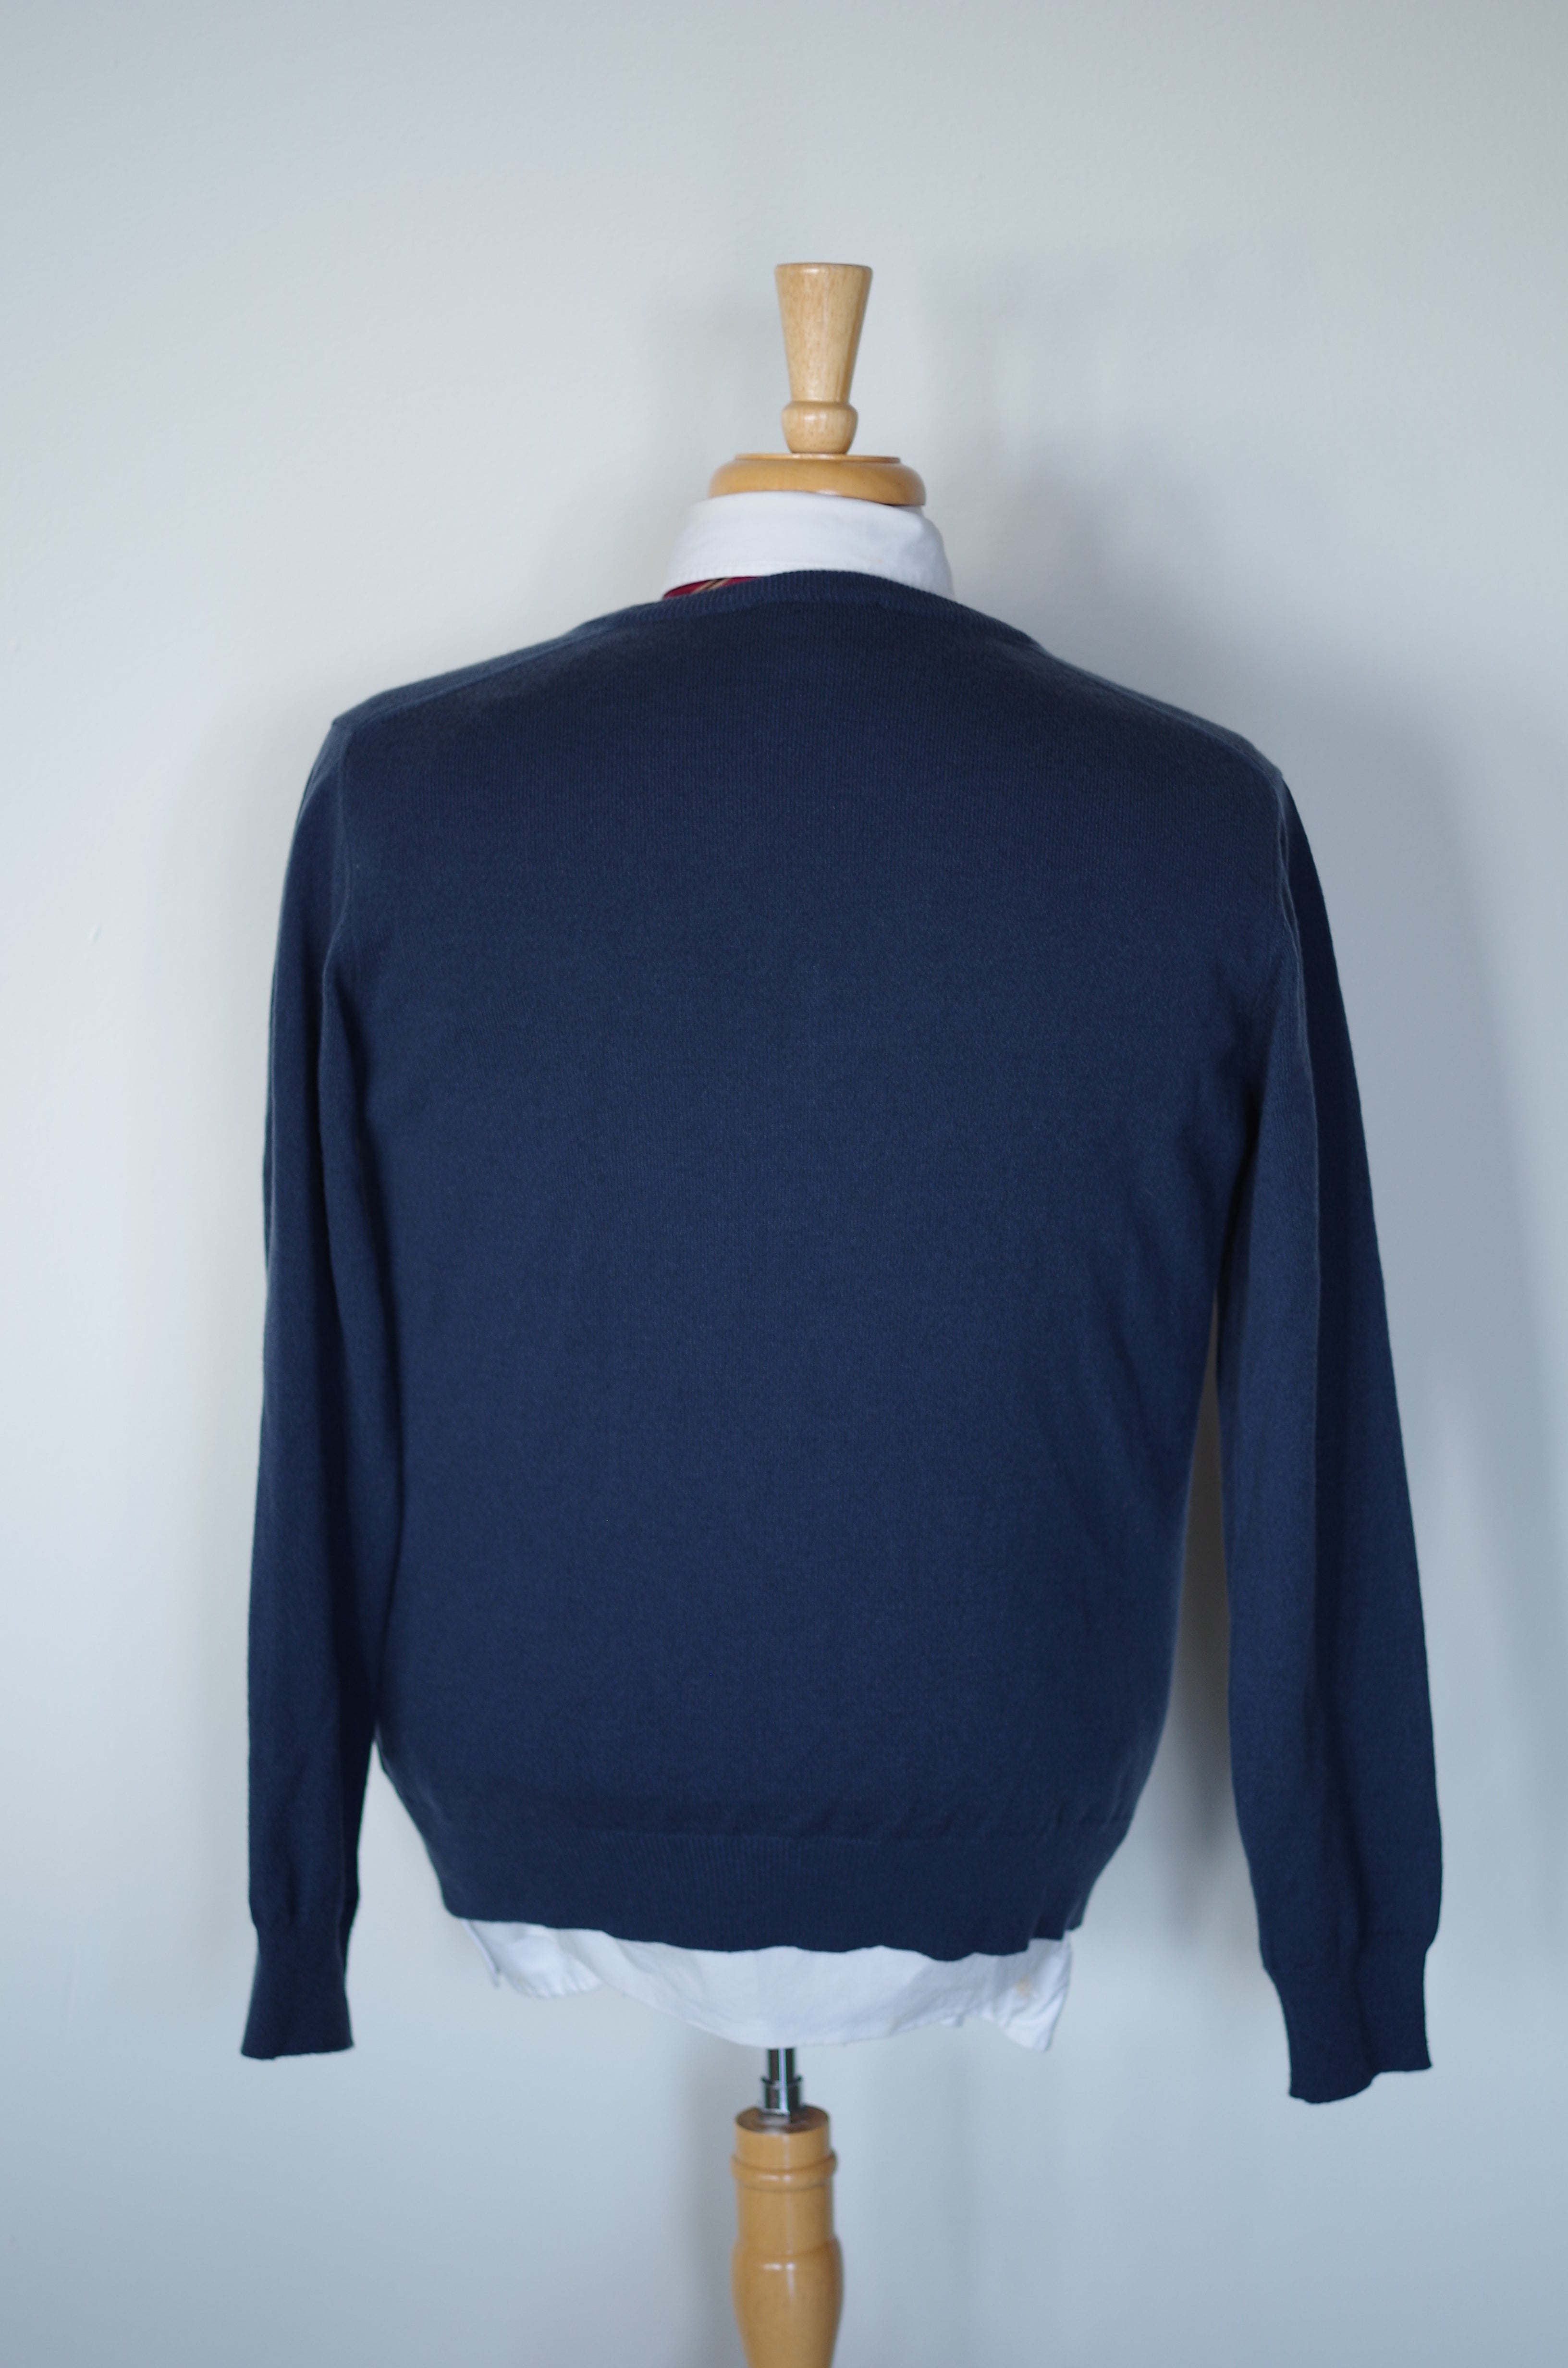 Luciano Barbera V-Neck Sweater- Size 52